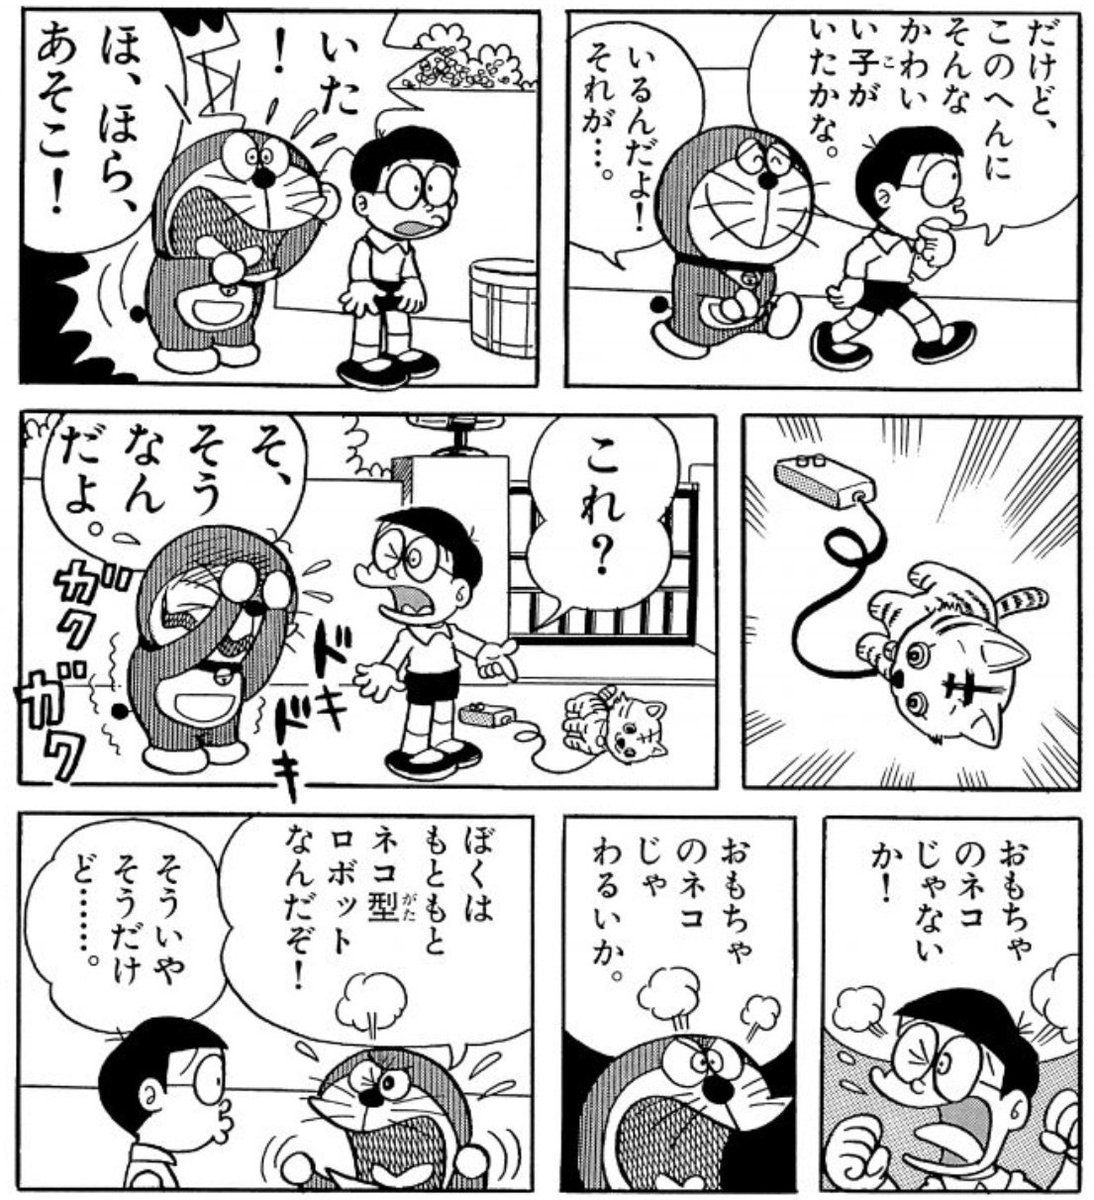 Msn Msnmsp1 さんの漫画 104作目 ツイコミ 仮